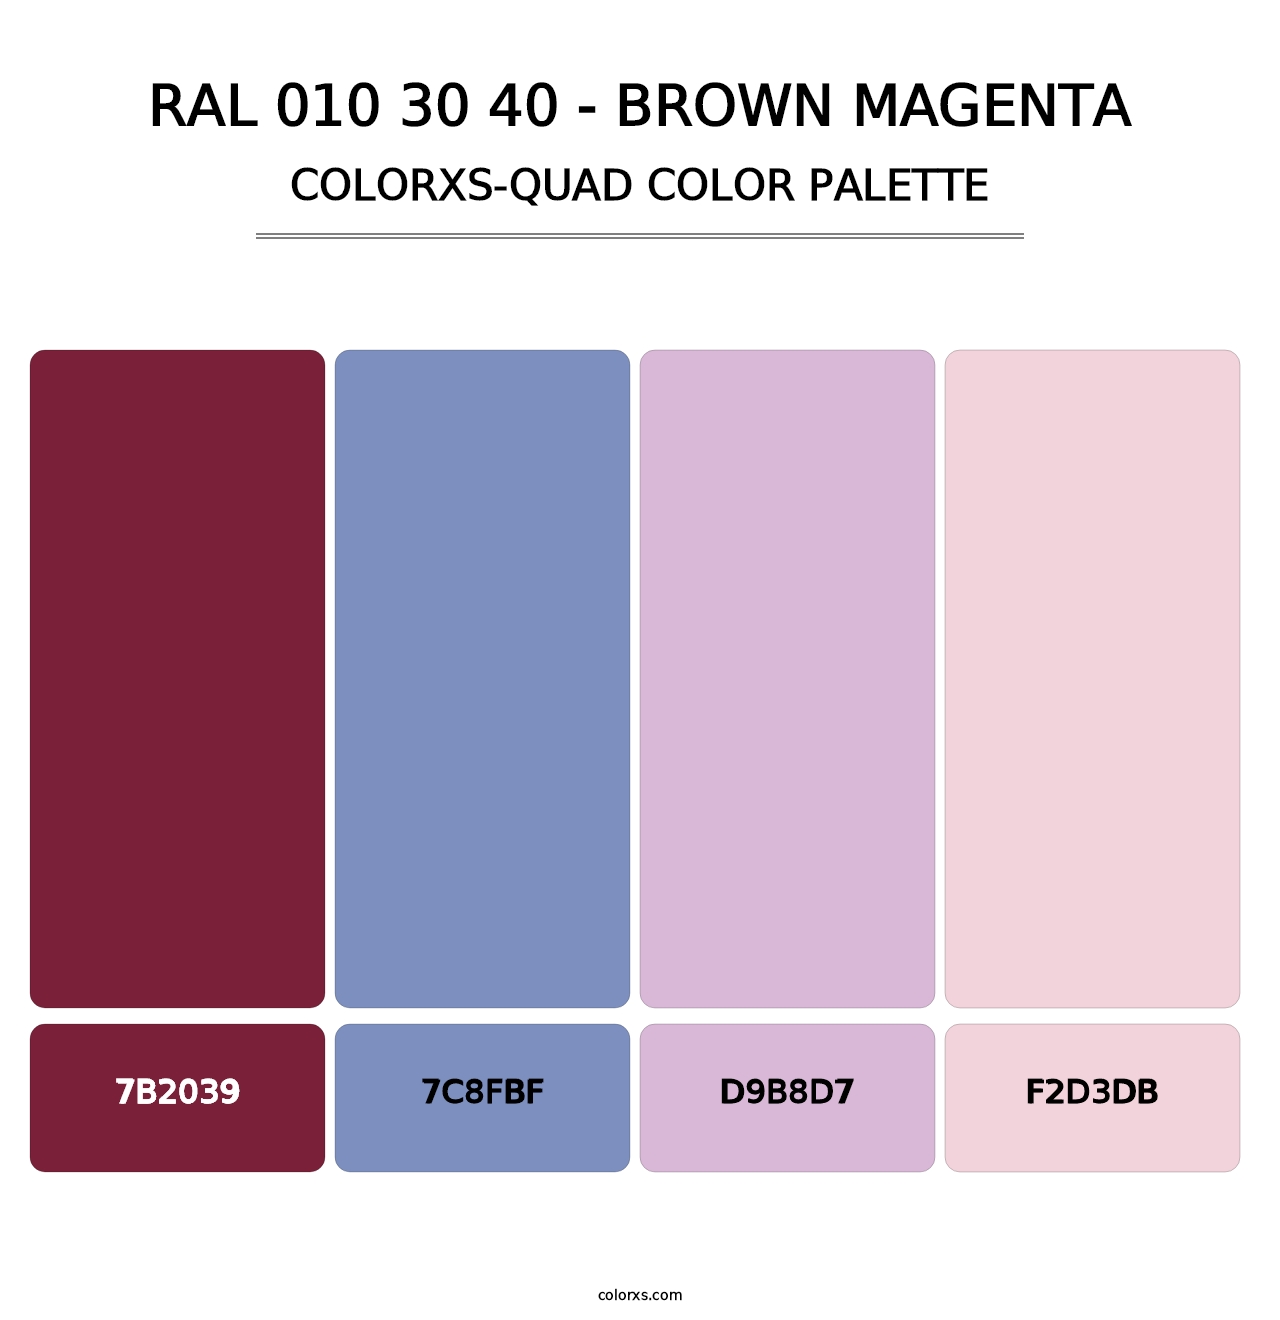 RAL 010 30 40 - Brown Magenta - Colorxs Quad Palette